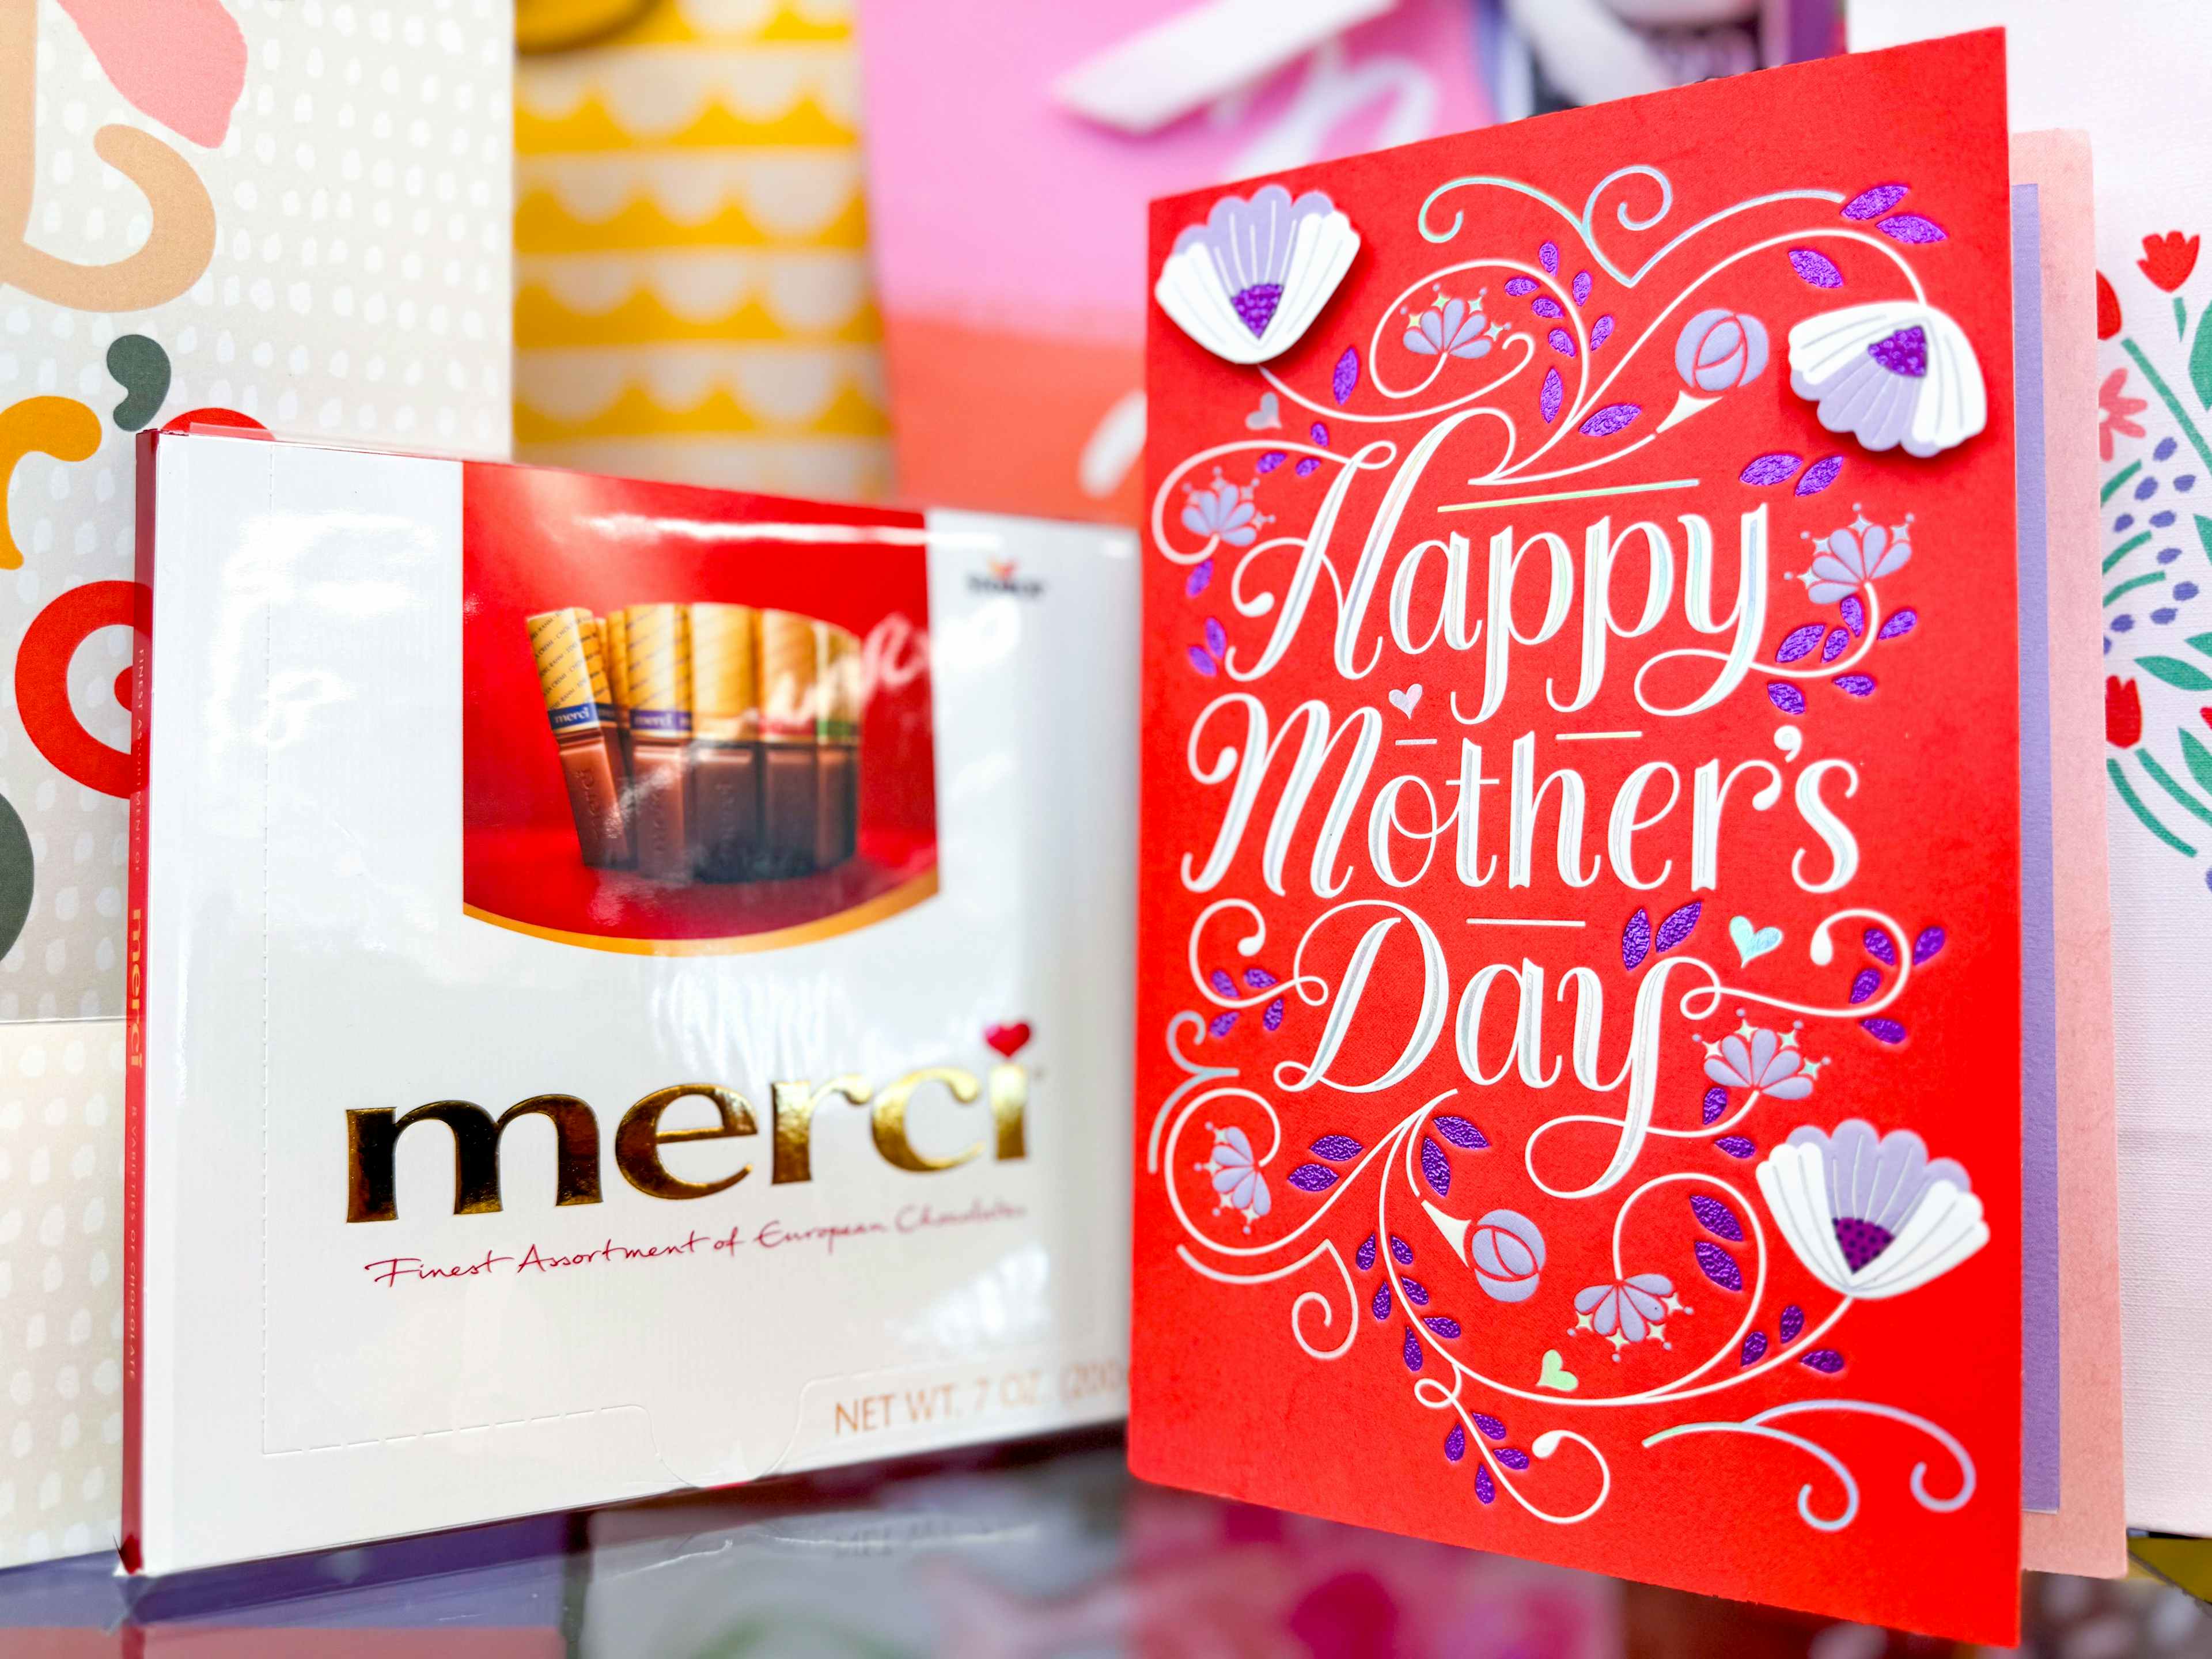 walgreens hallmark merci mothers day bundle deal058